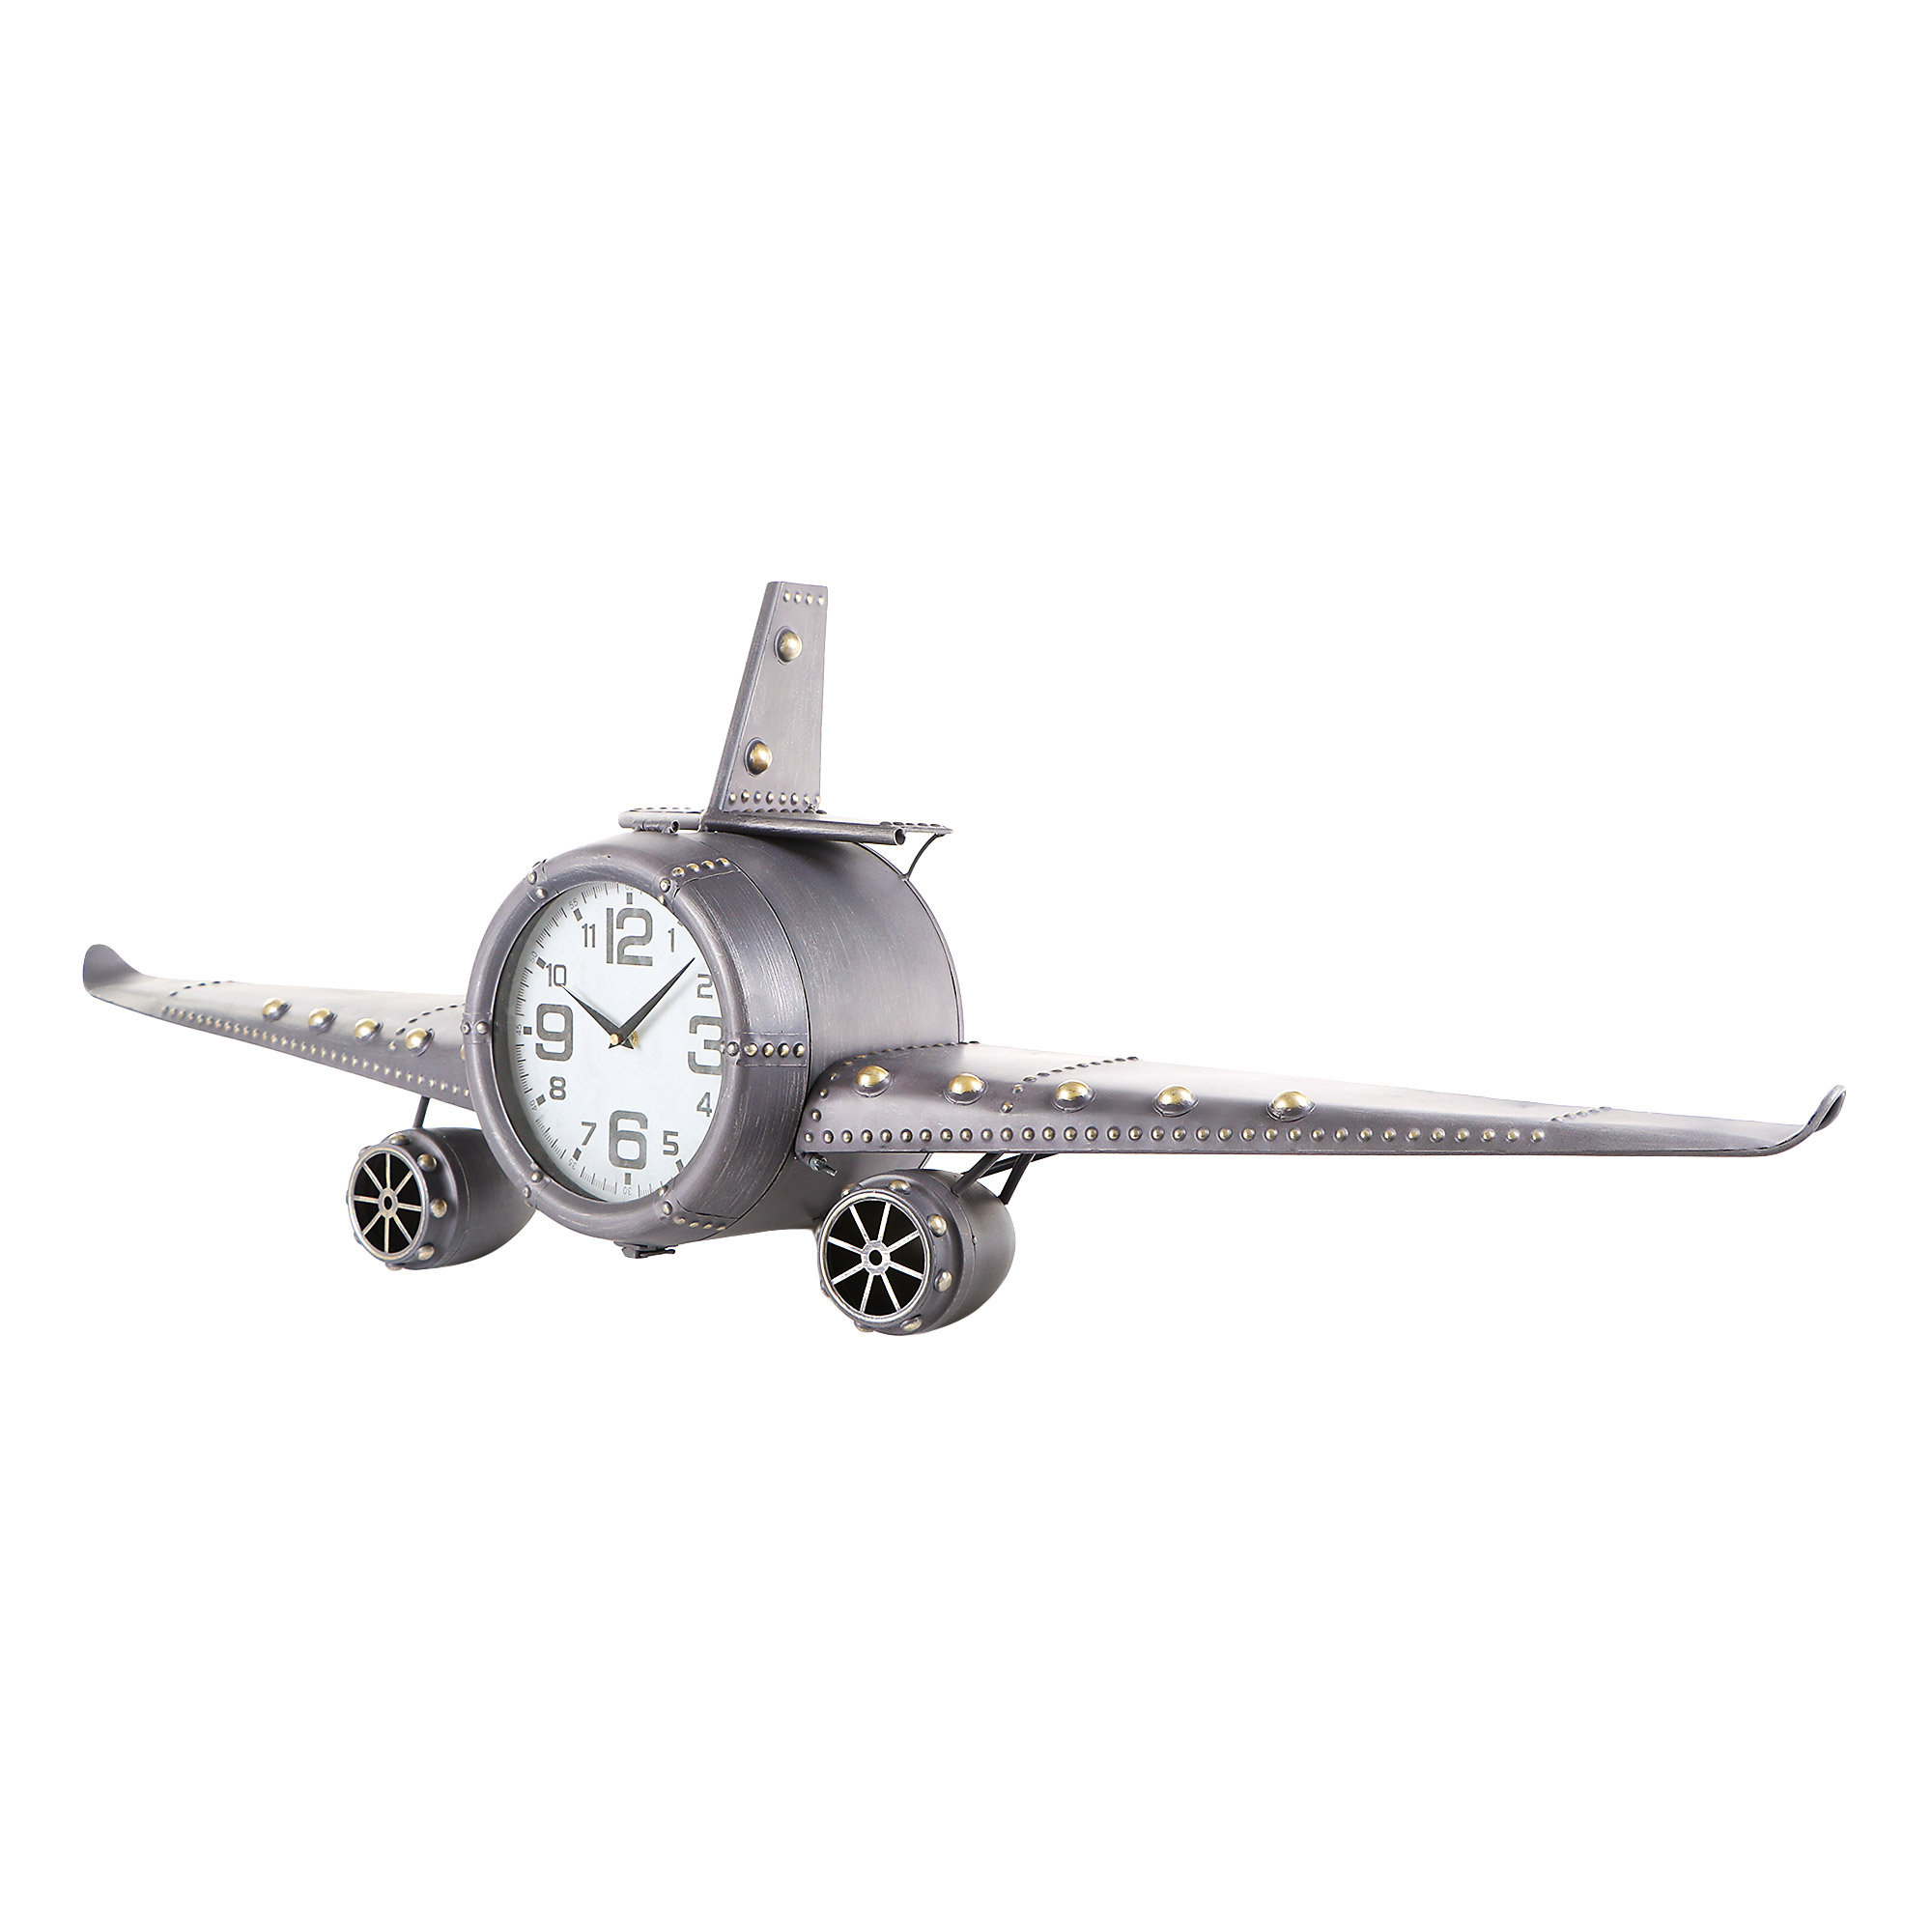 Часы самолет ростов на дону. Bolai Arts часы самолет. Часы настенные Bolai Arts кукурузник 95х17.5х34 см. Часы настольные самолет. Часы самолет настенные металлические.